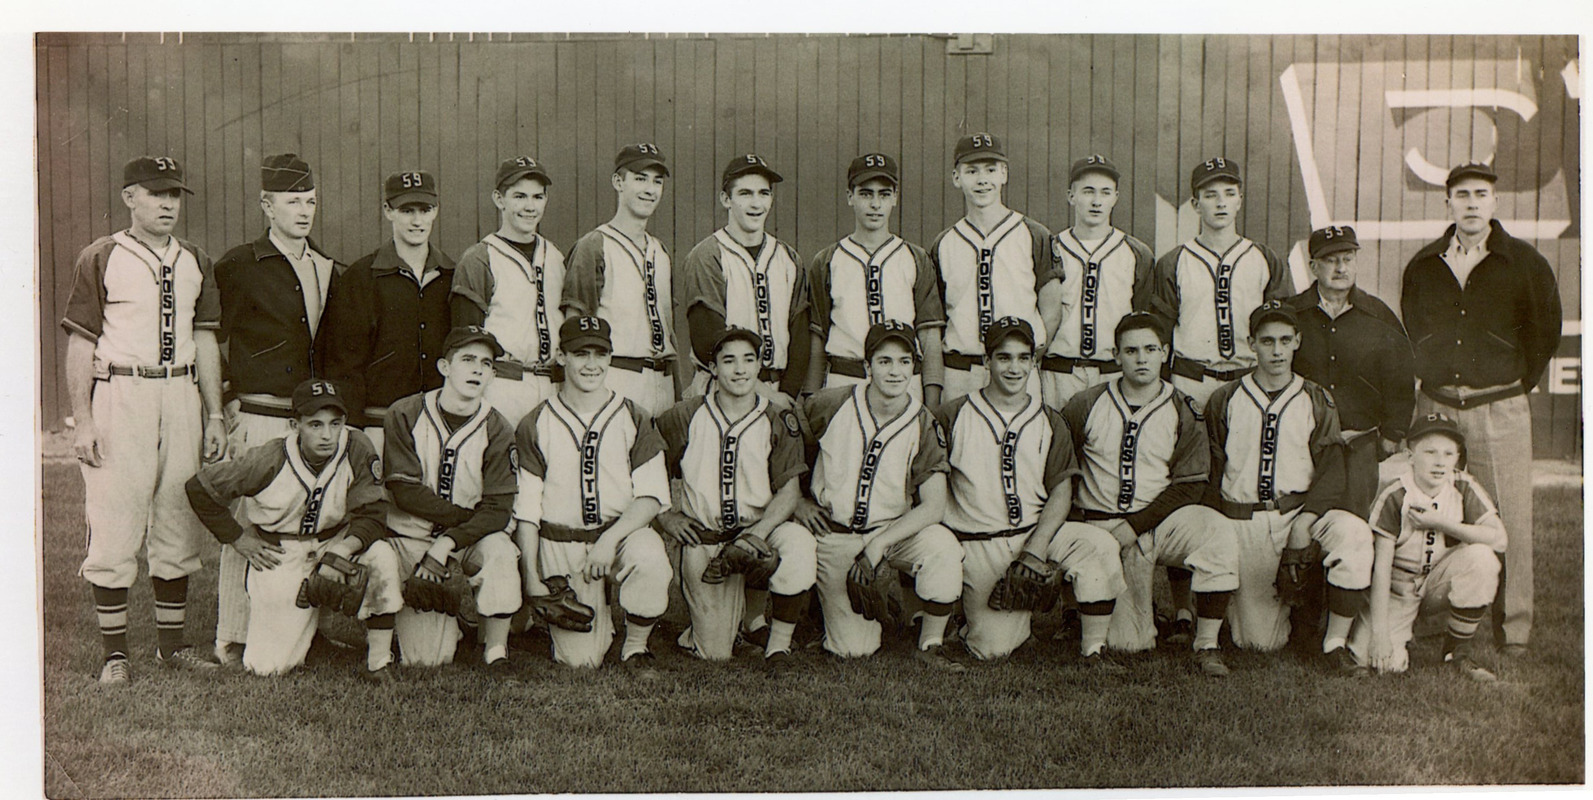 Milford American Legion 1950s baseball team